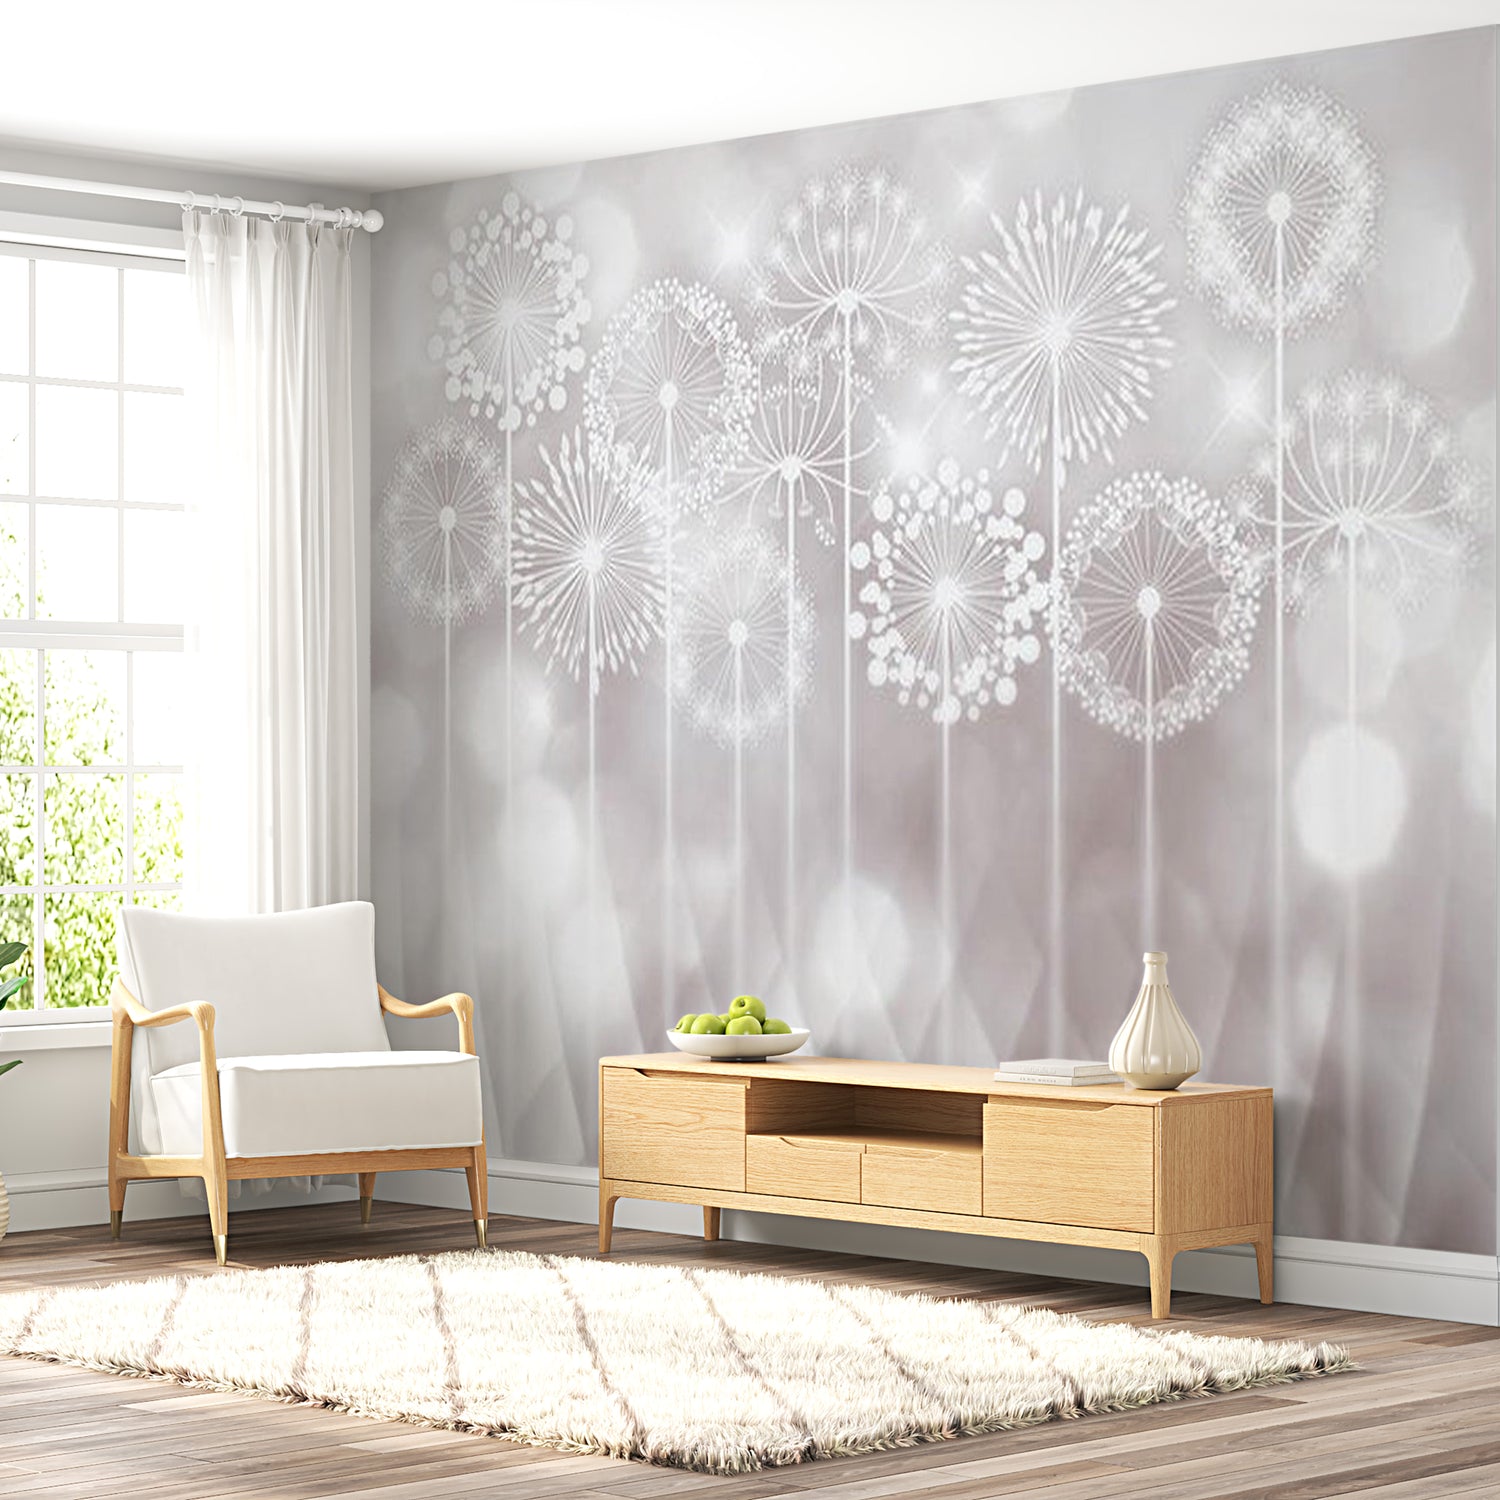 Floral Wallpaper Wall Mural - Dreamy Dandelions